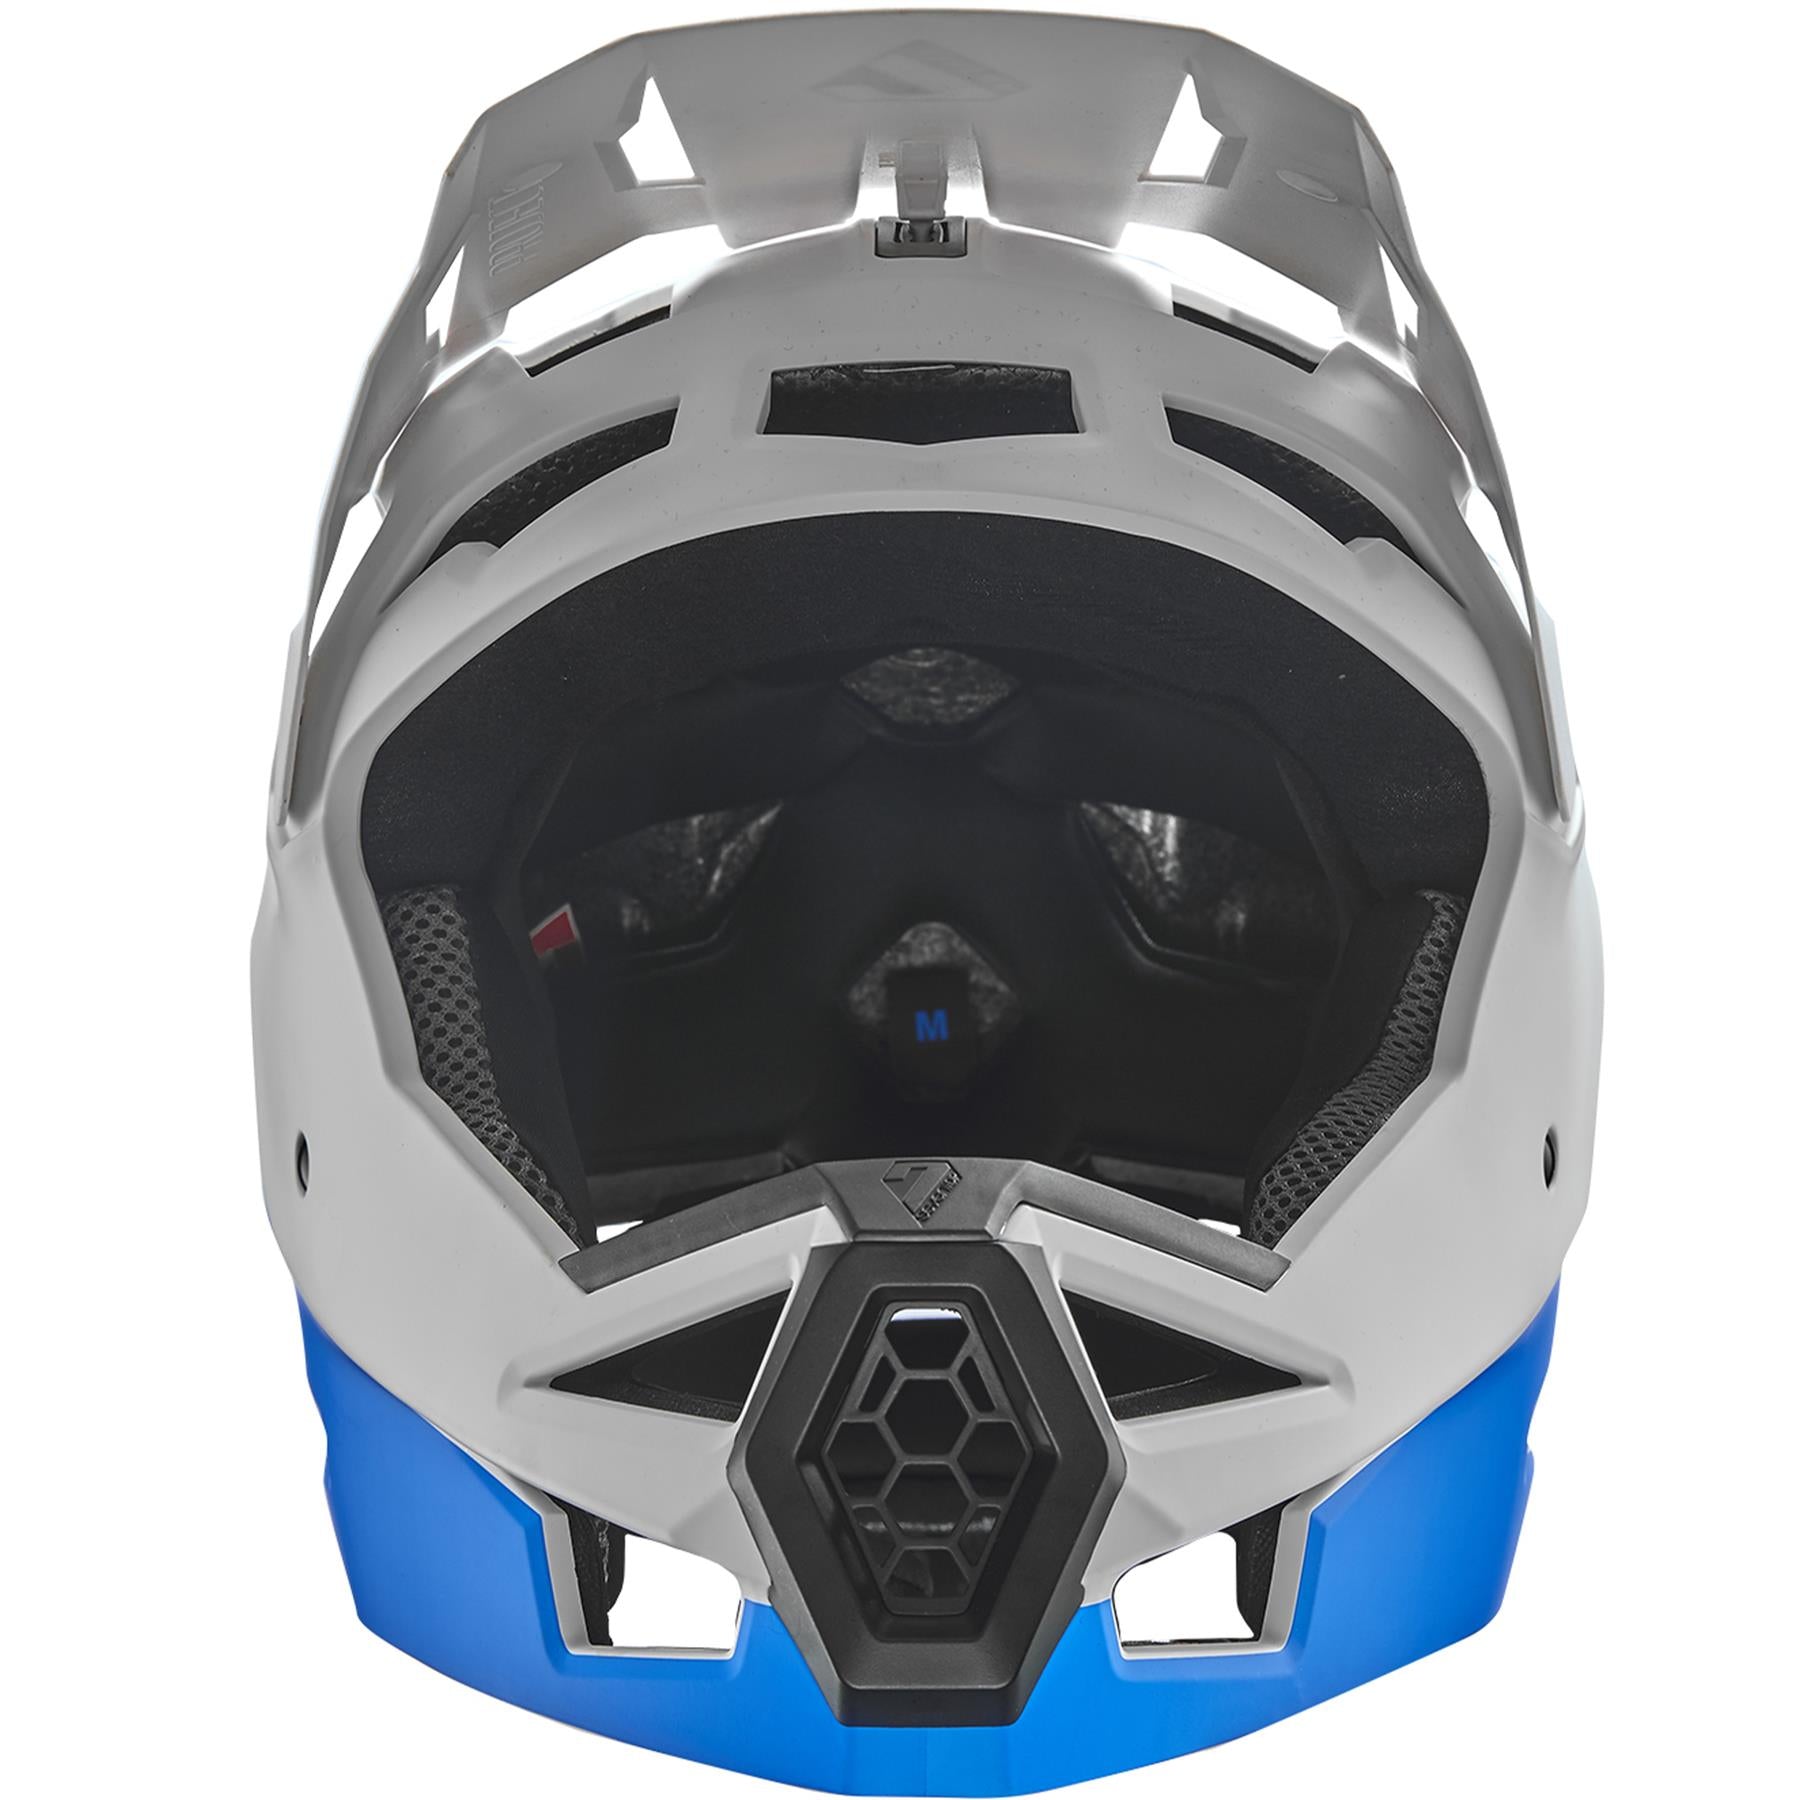 Seven iDP Project 23 ABS Race Helmet - White/Blue